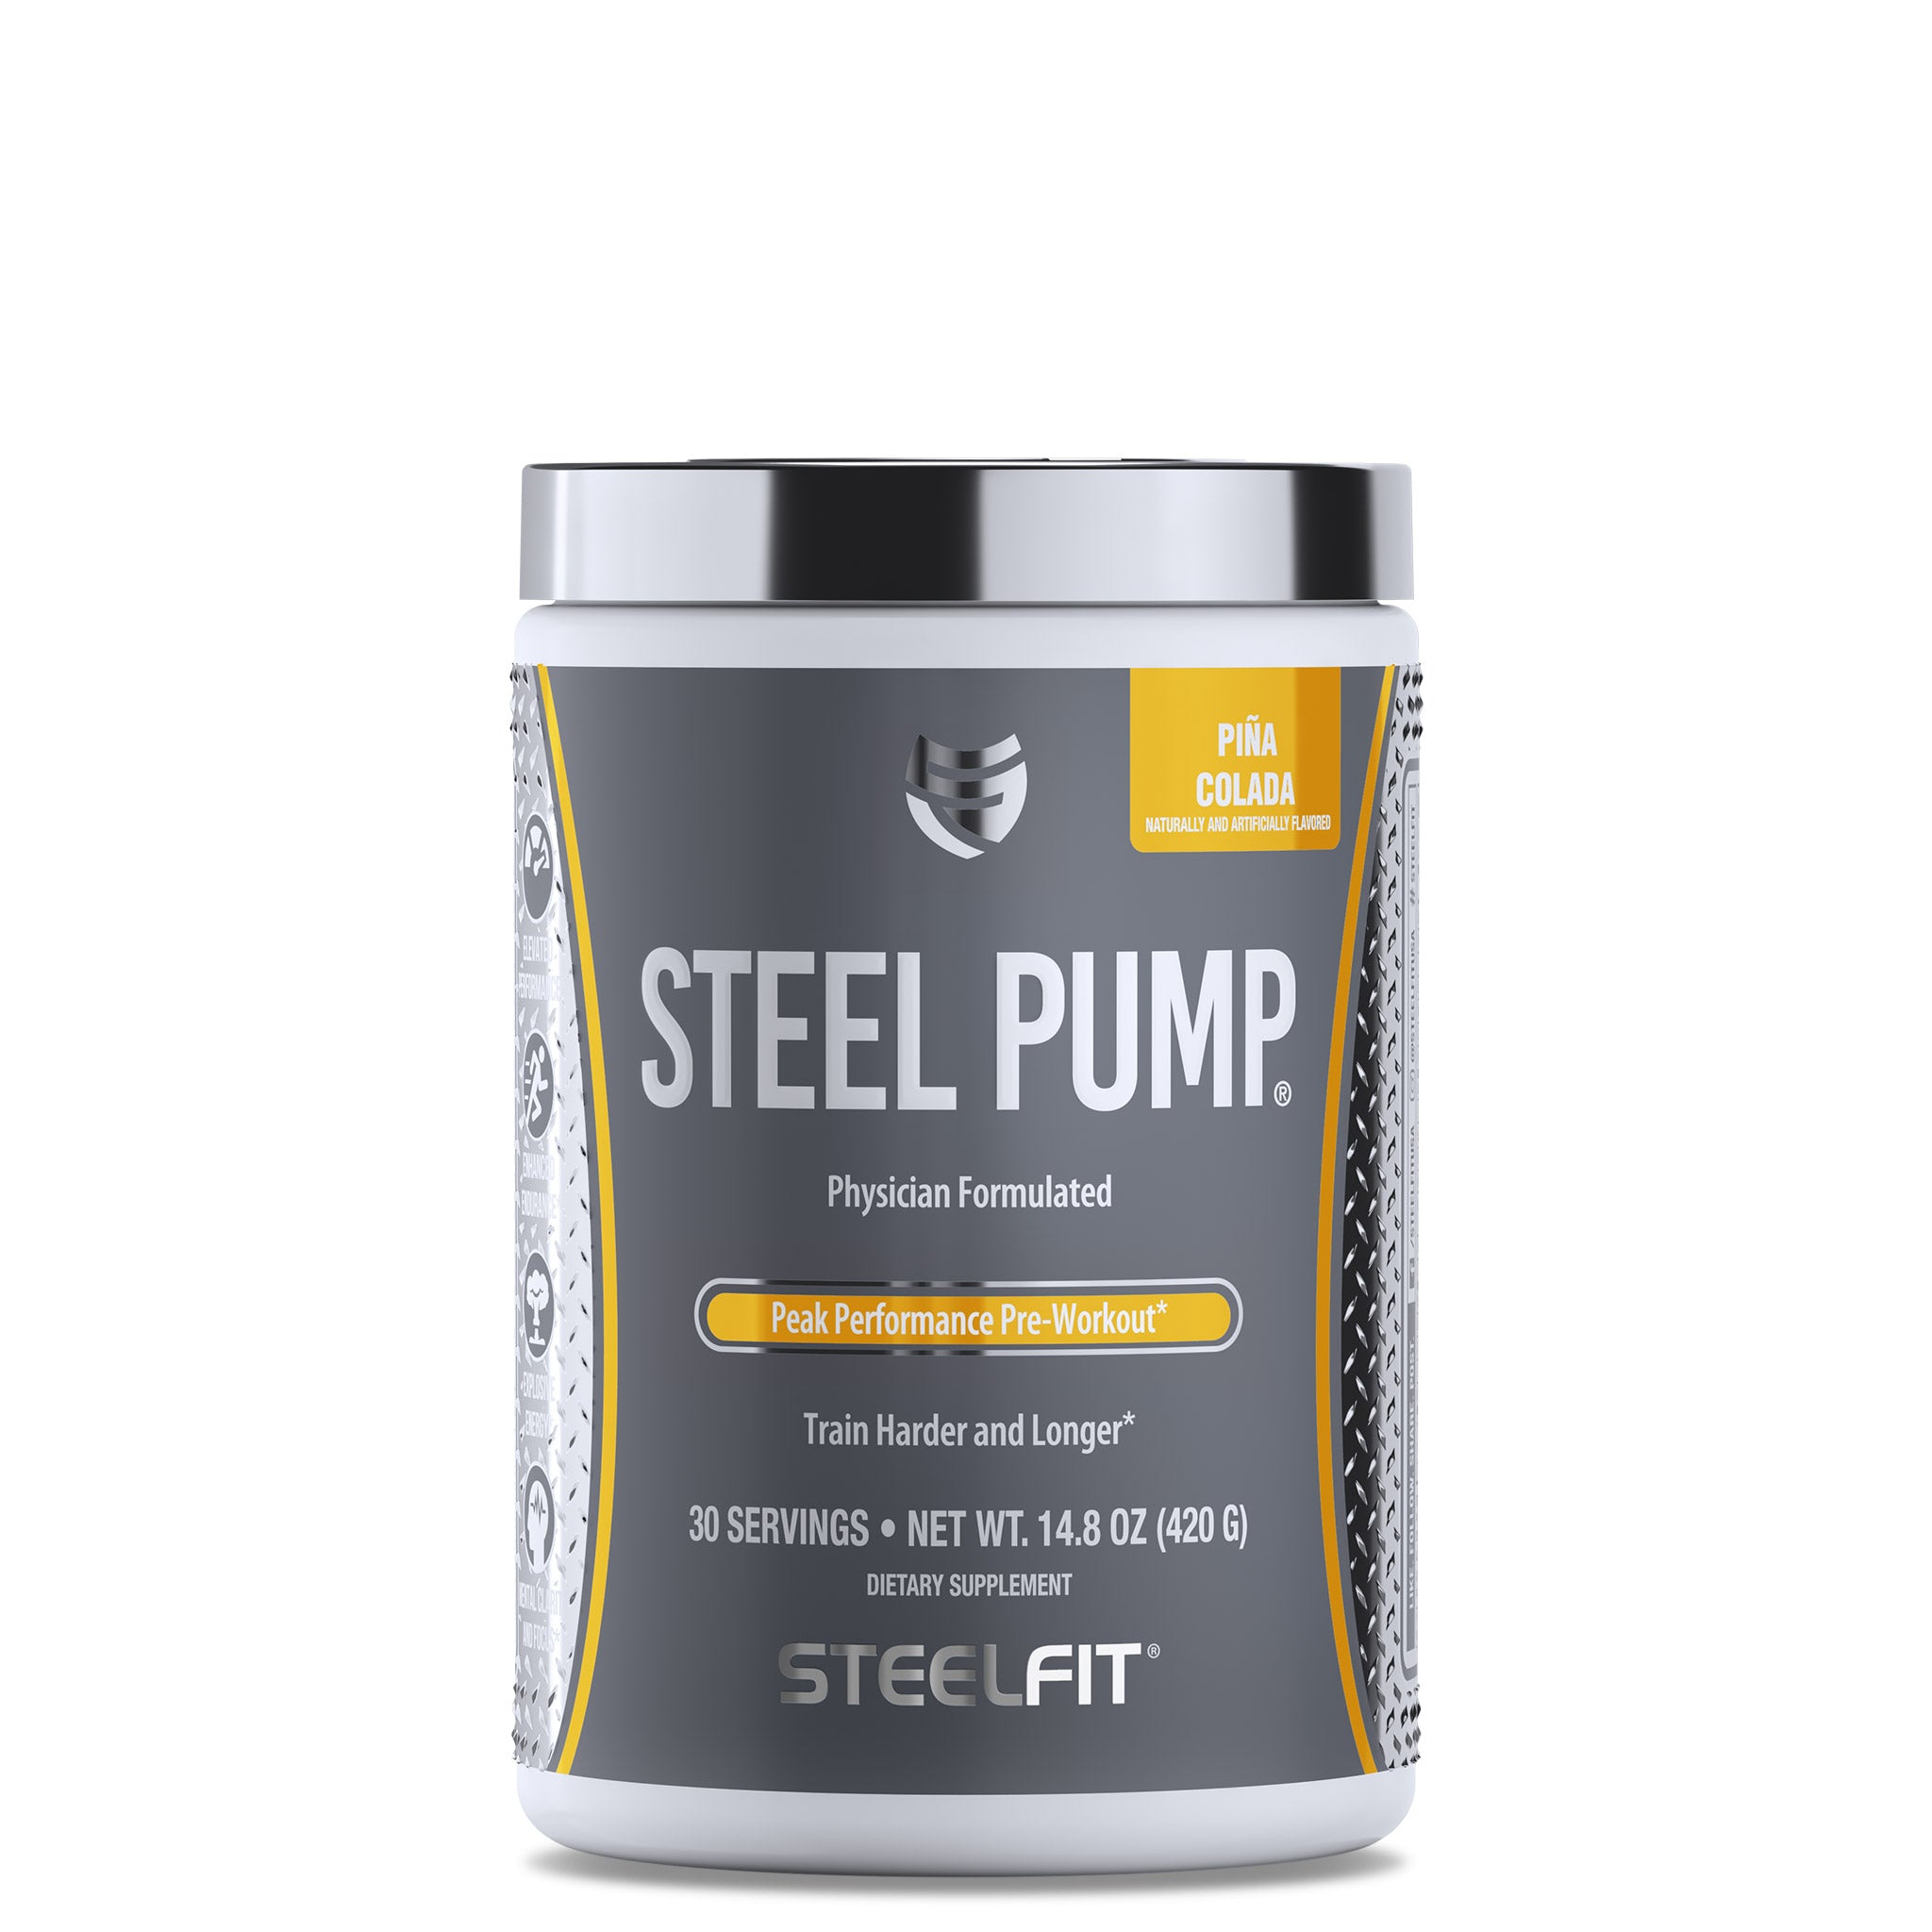 Steel Pump Pina Colada Flavor Peak Performance Pre-Workout Supplement Powder